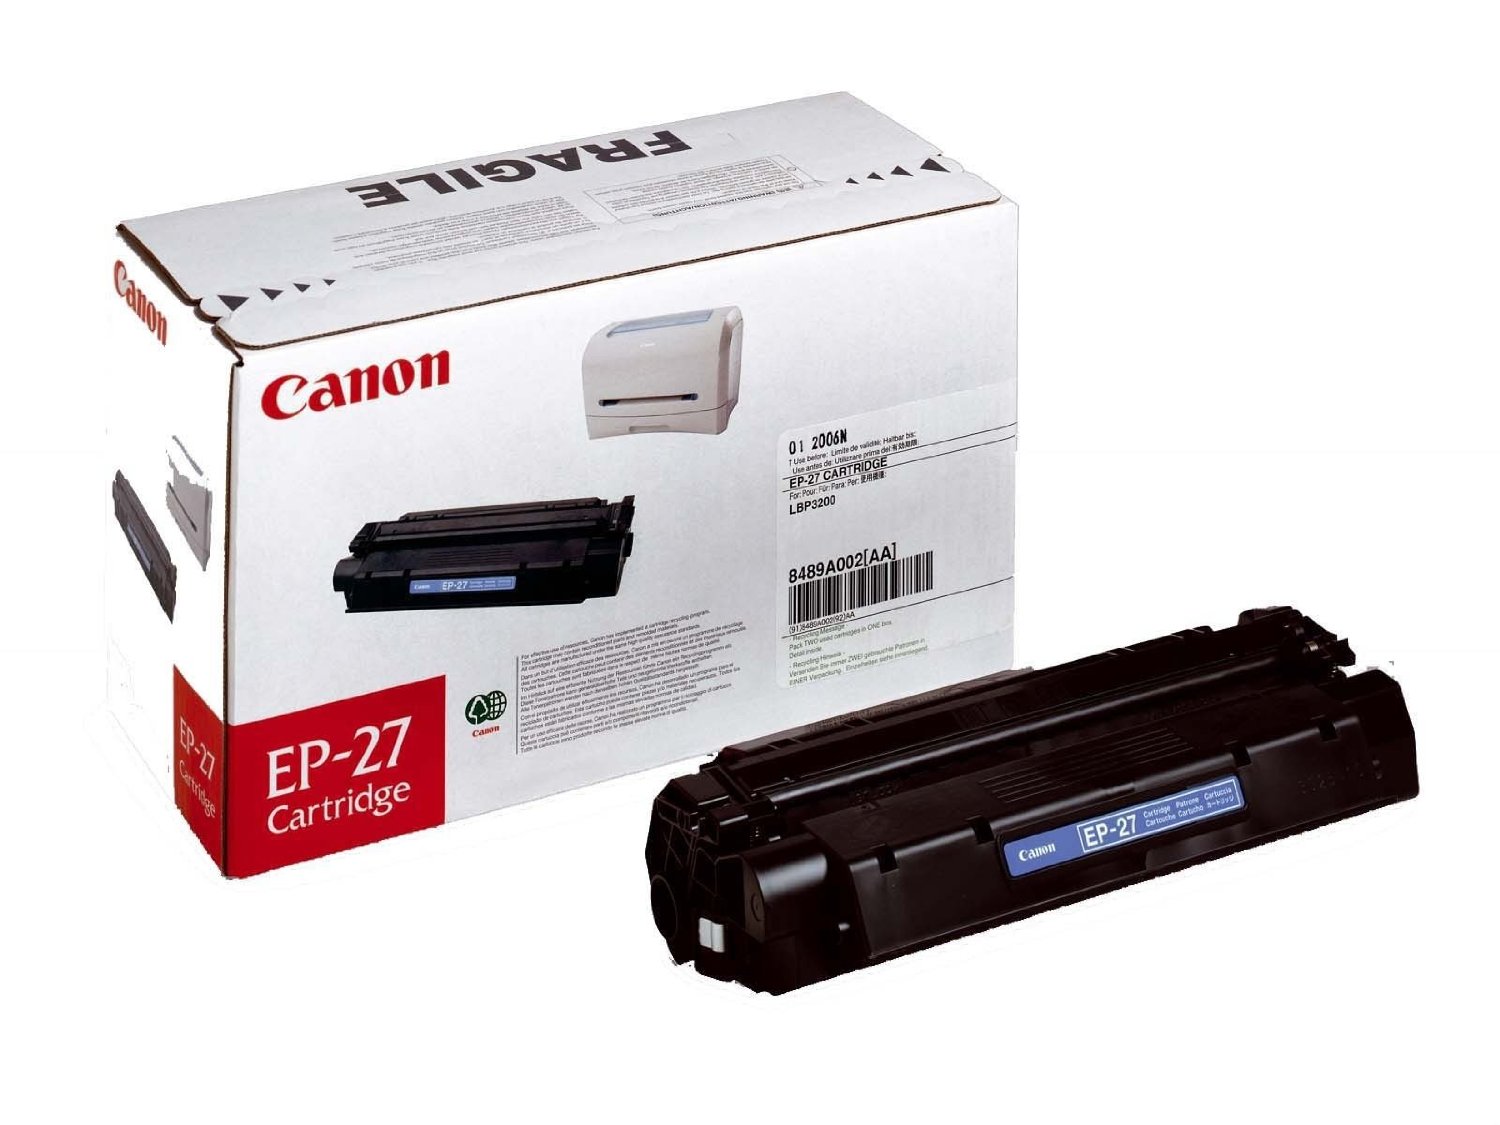 Canon toner nero EP-27 8489A002 capacit